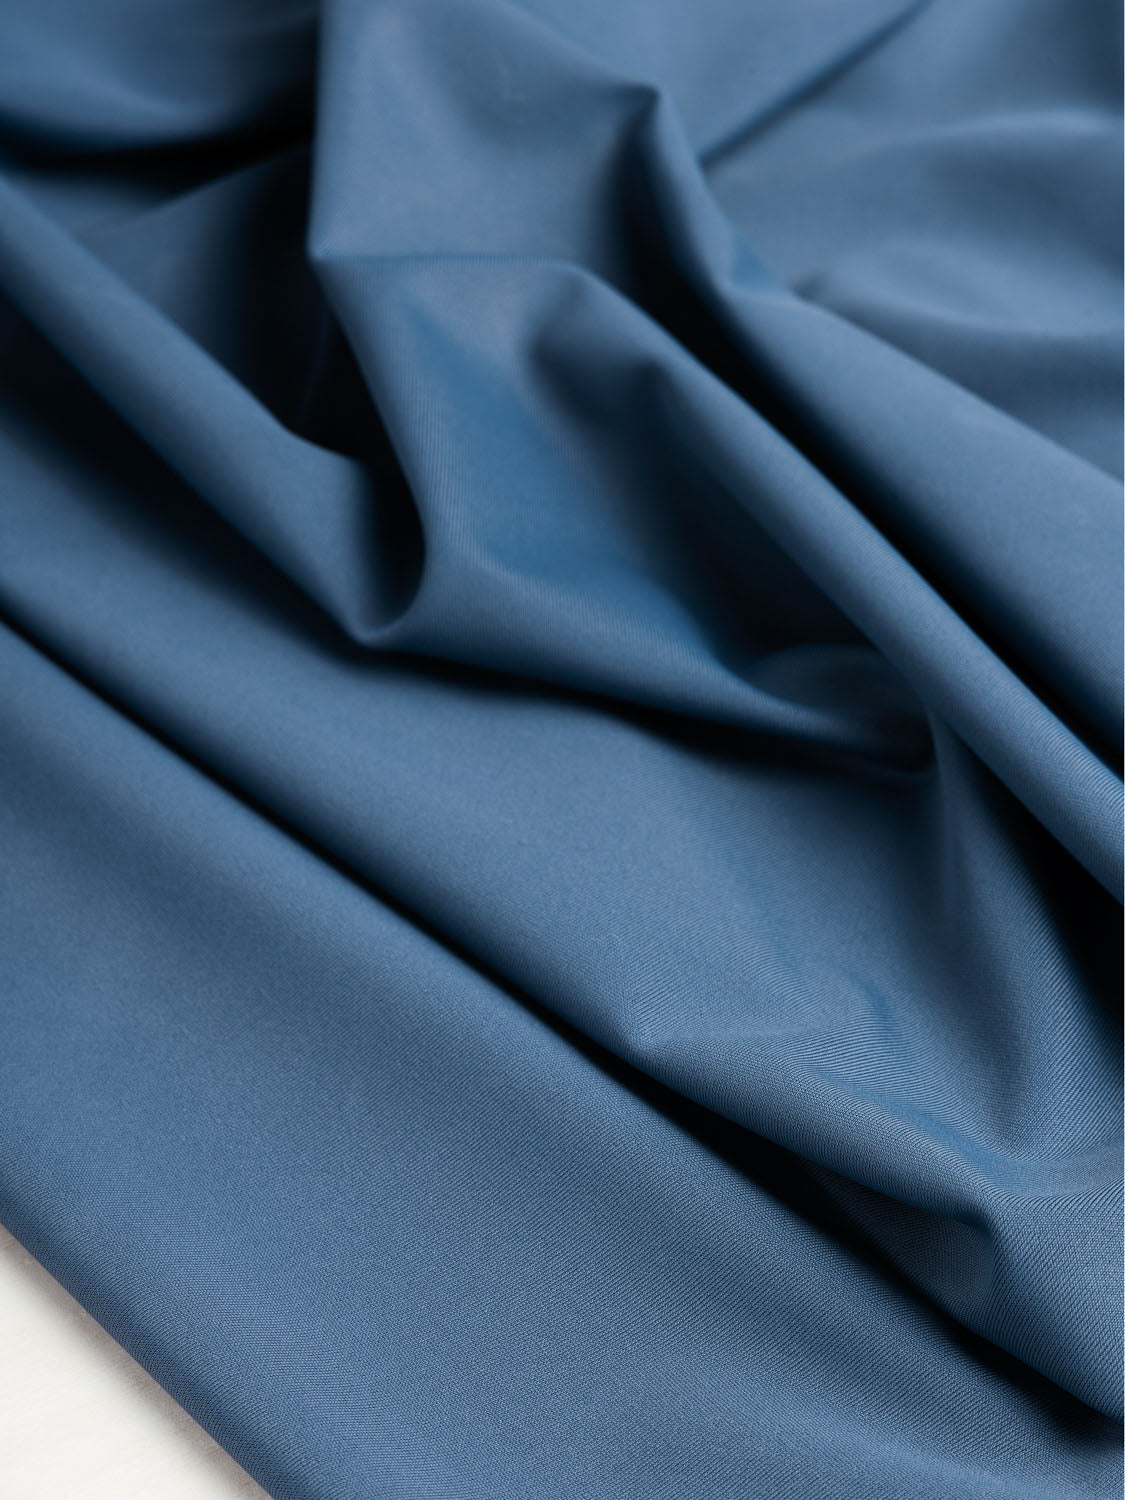 Cotton Lycra Fabric Sewing Spandex Fabric Lycra Knit Stretch Fabric Light  Weight Apparel Craft Fabric DIY Fabric for Swimwear 